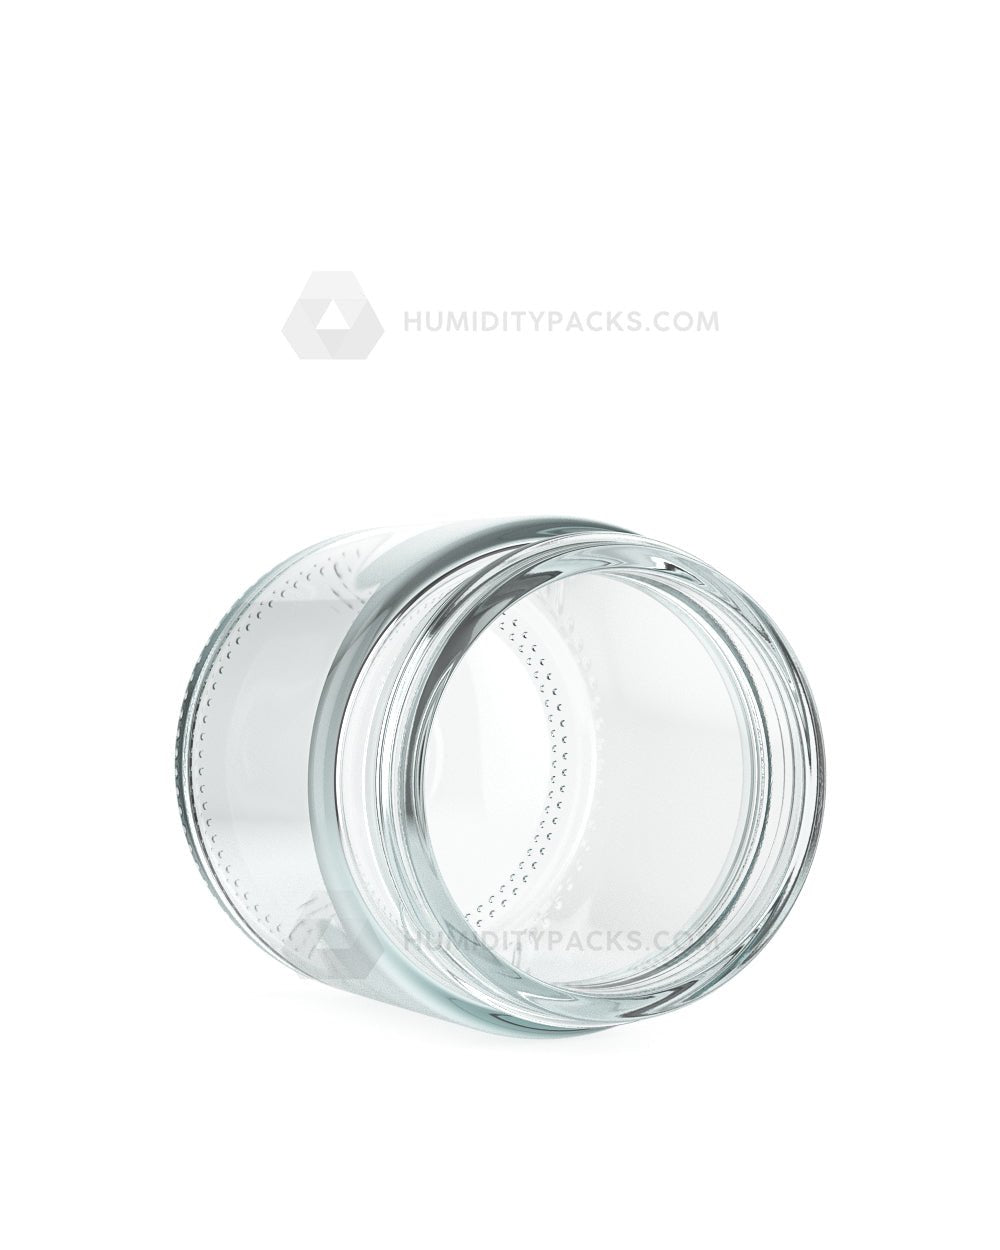 50mm Straight Sided Clear 3oz Glass Jar 150/Box Humidity Packs - 3